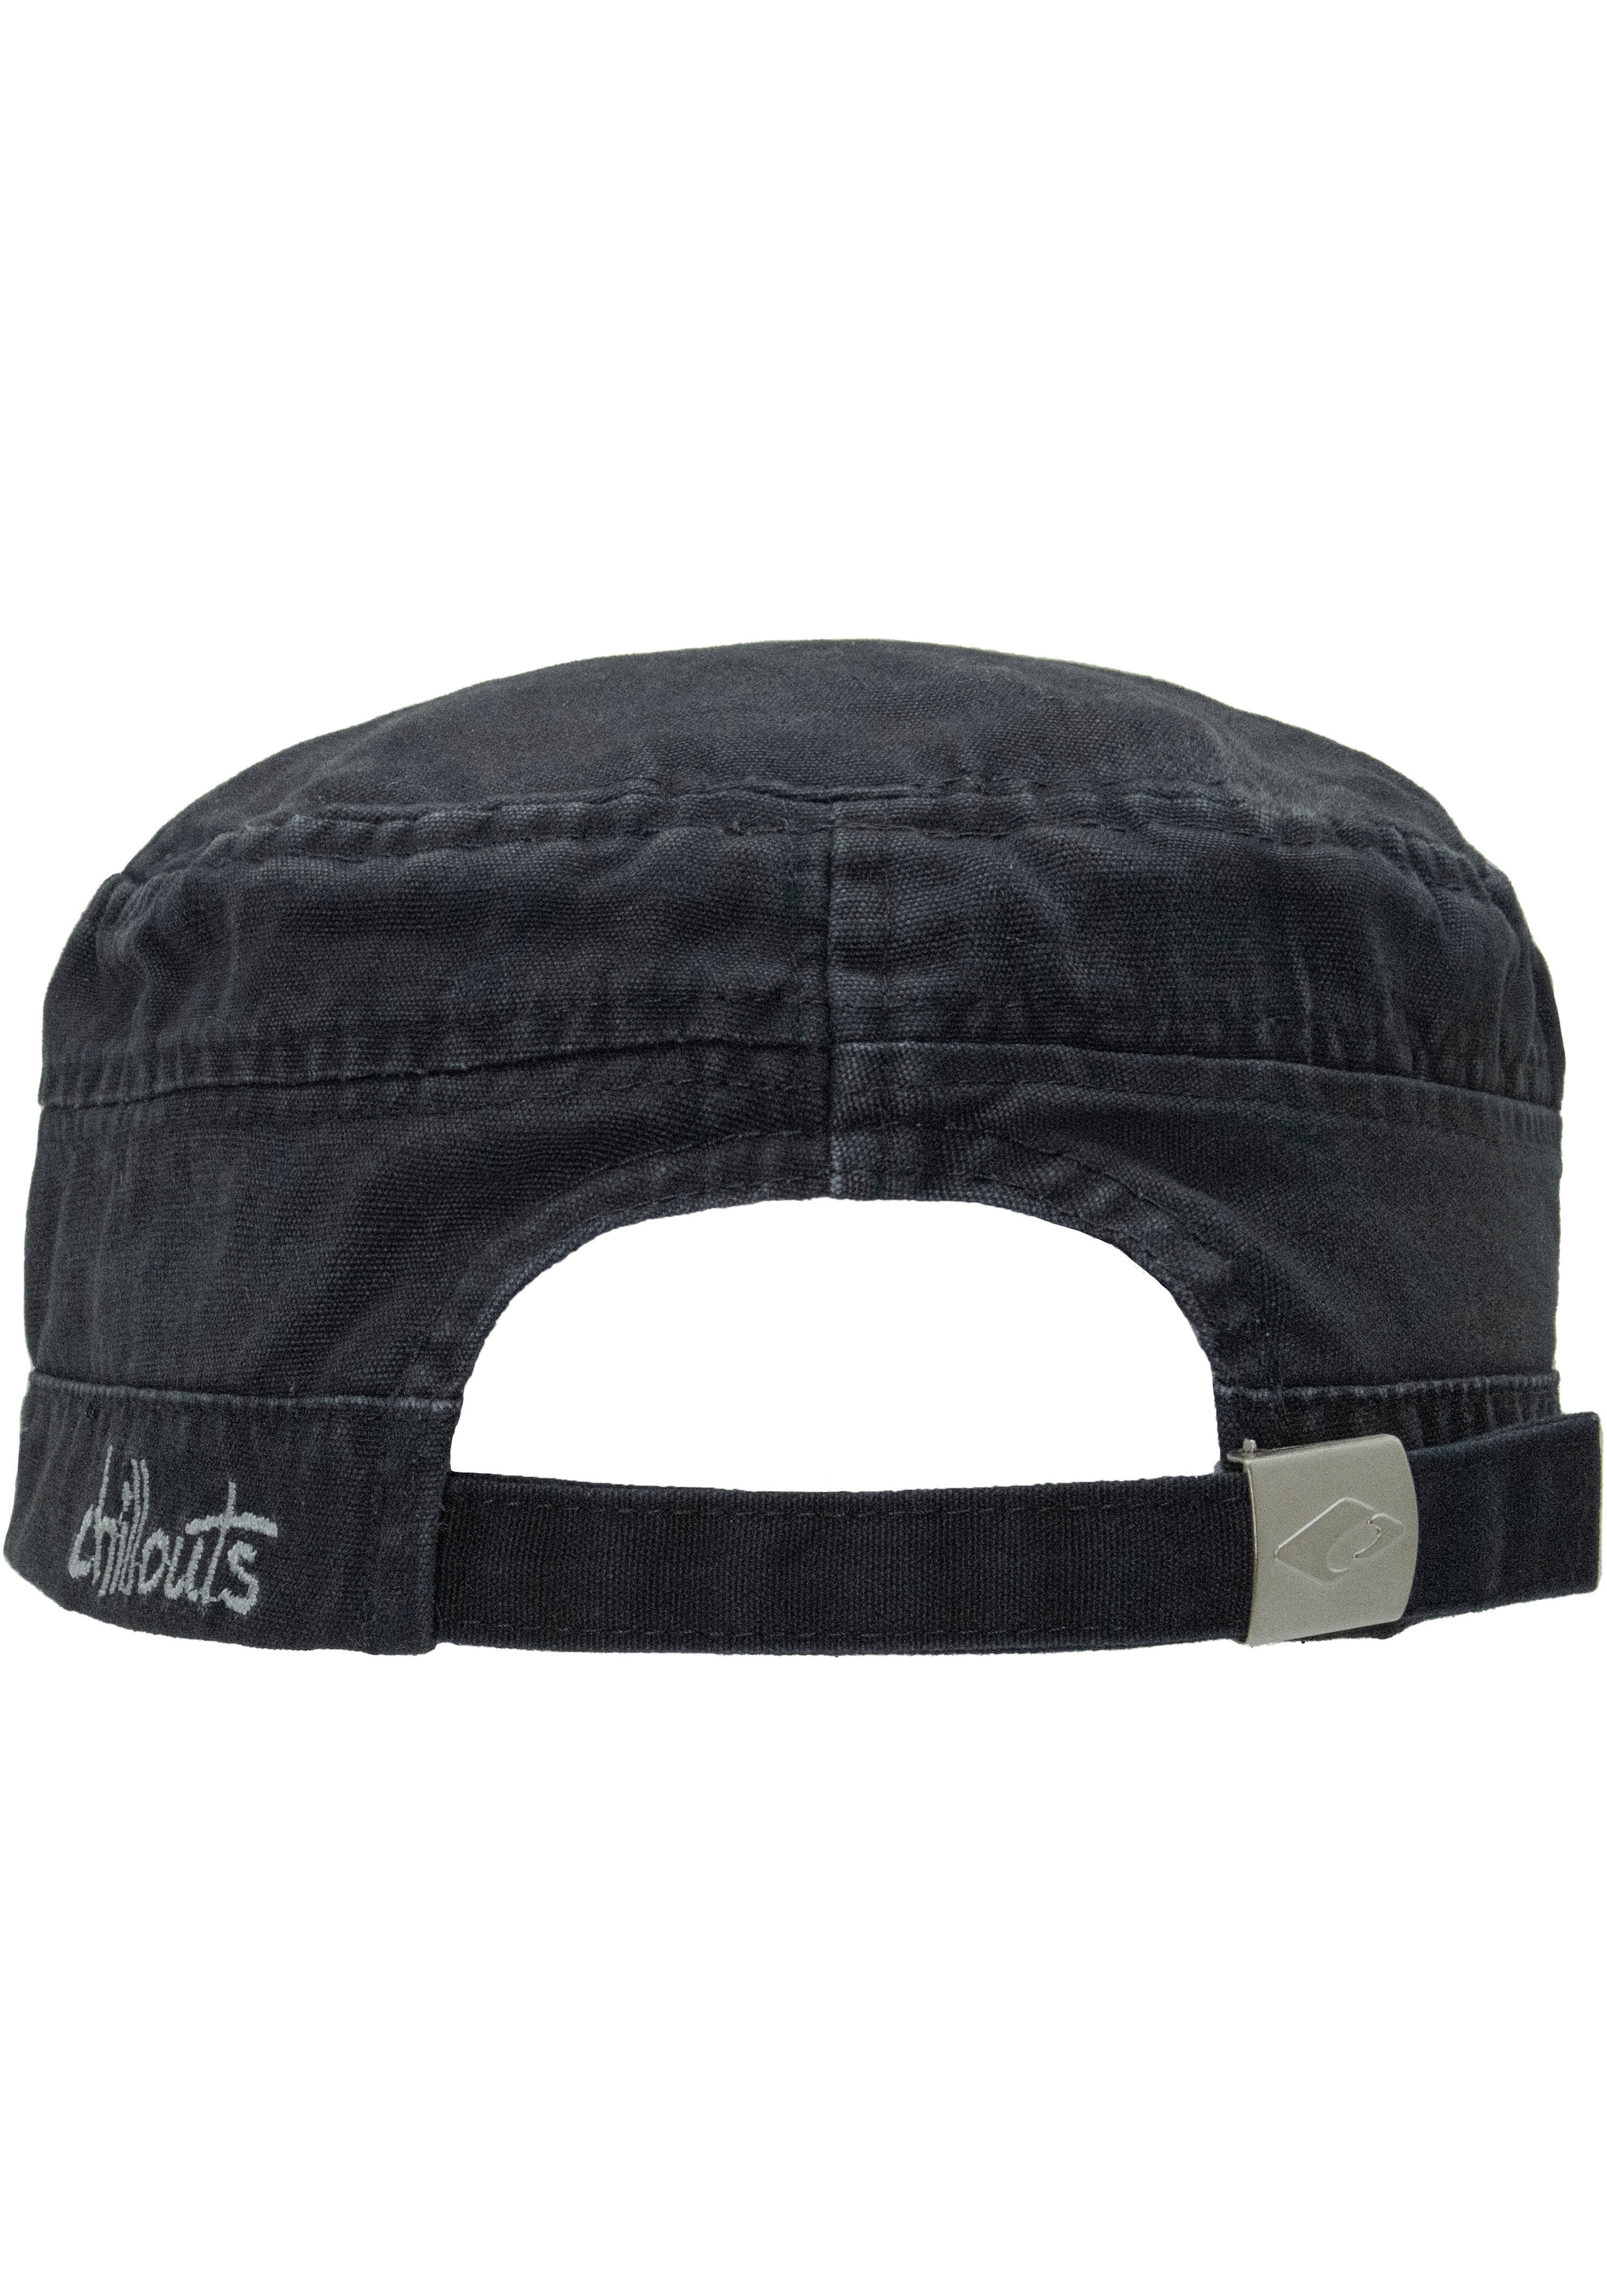 chillouts Army Cap online Baumwolle, shoppen »El reiner OTTO Hat«, atmungsaktiv, bei Paso One Size aus